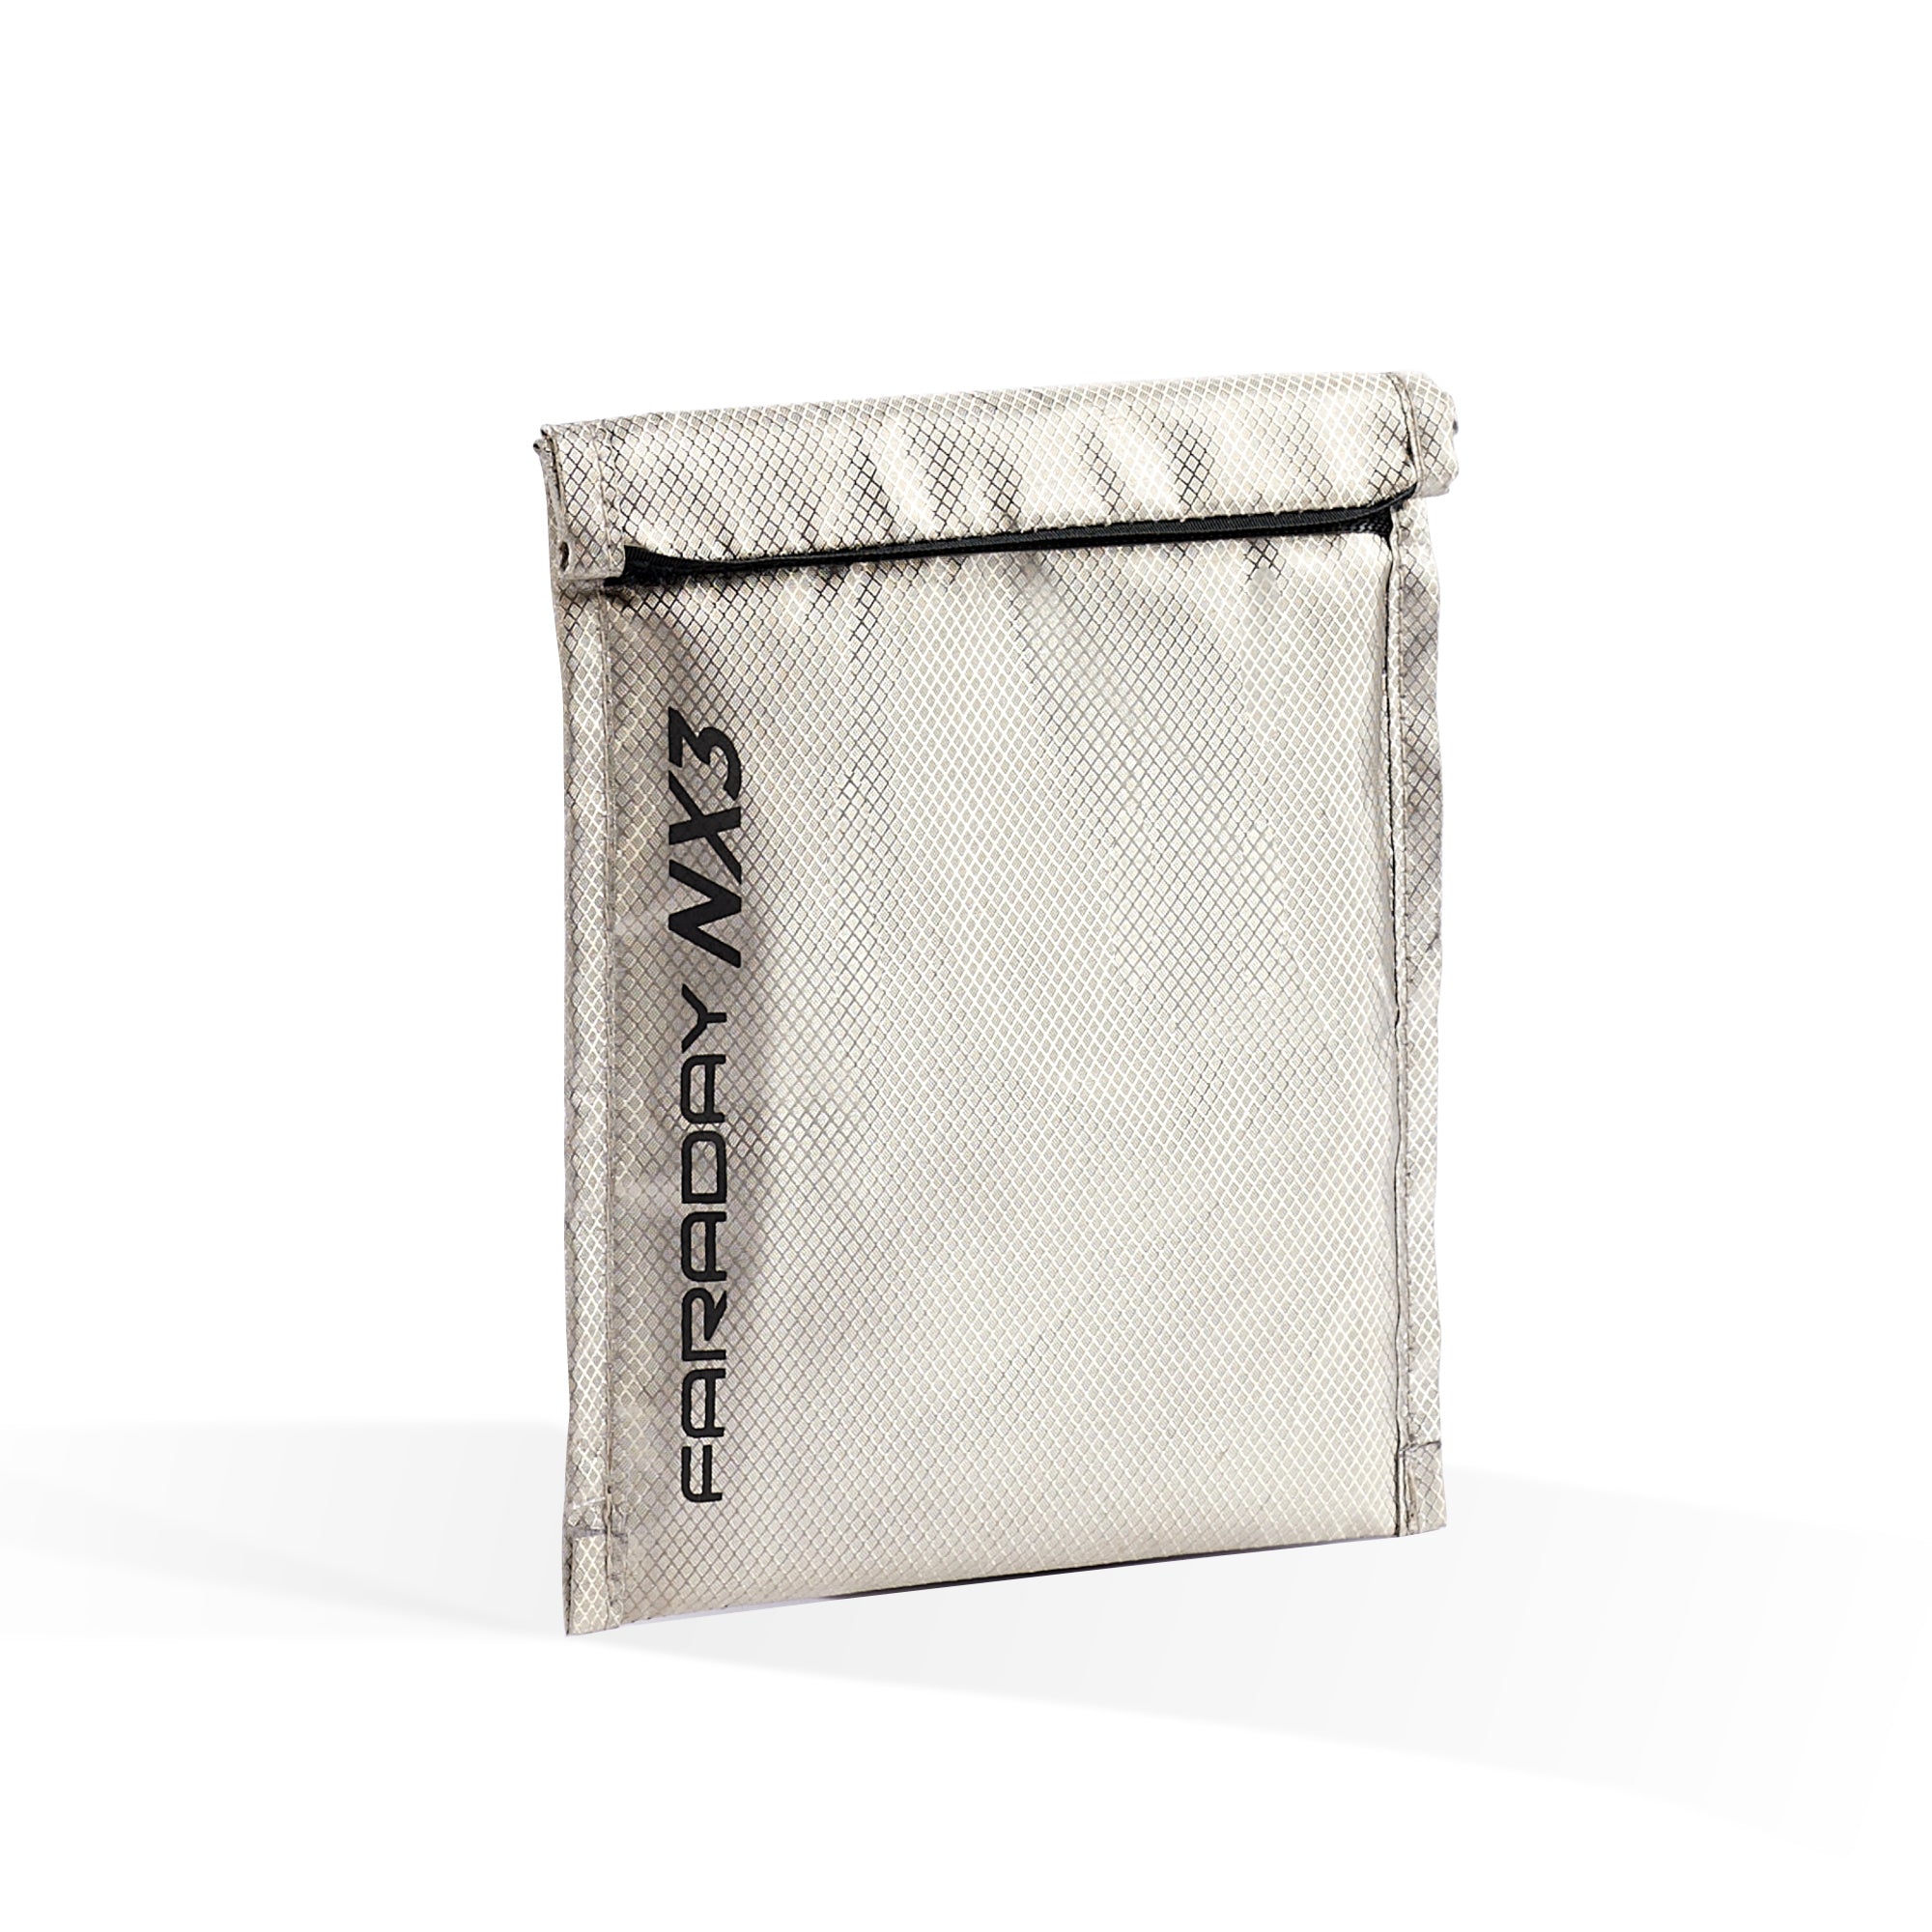 10pc Mega Kit NX3 Double Layer CYBER Fabric Faraday Bag - Faraday Defe -  Wild Oak Trail